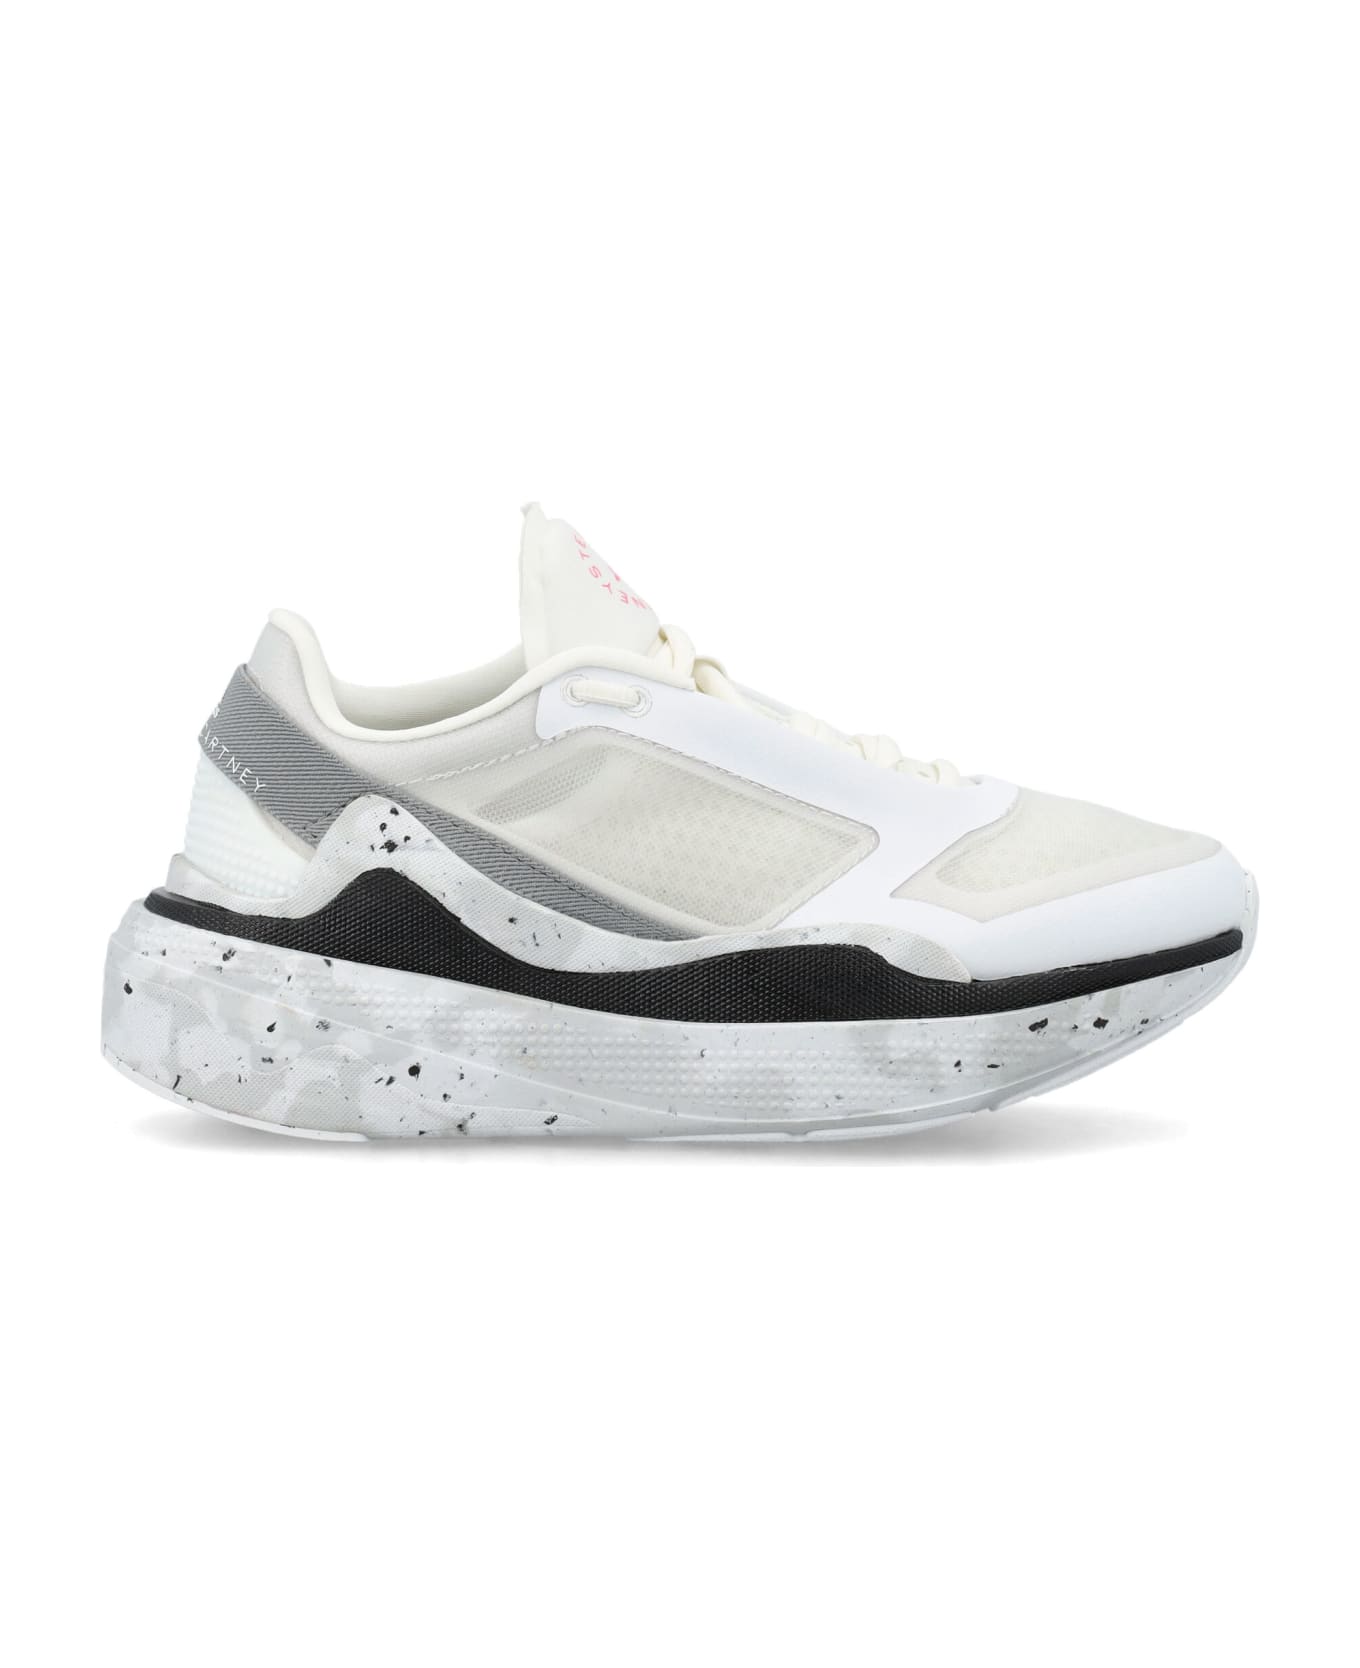 Adidas by Stella McCartney Woman's Eartlight Mesh Running Shoes - WHITE スニーカー